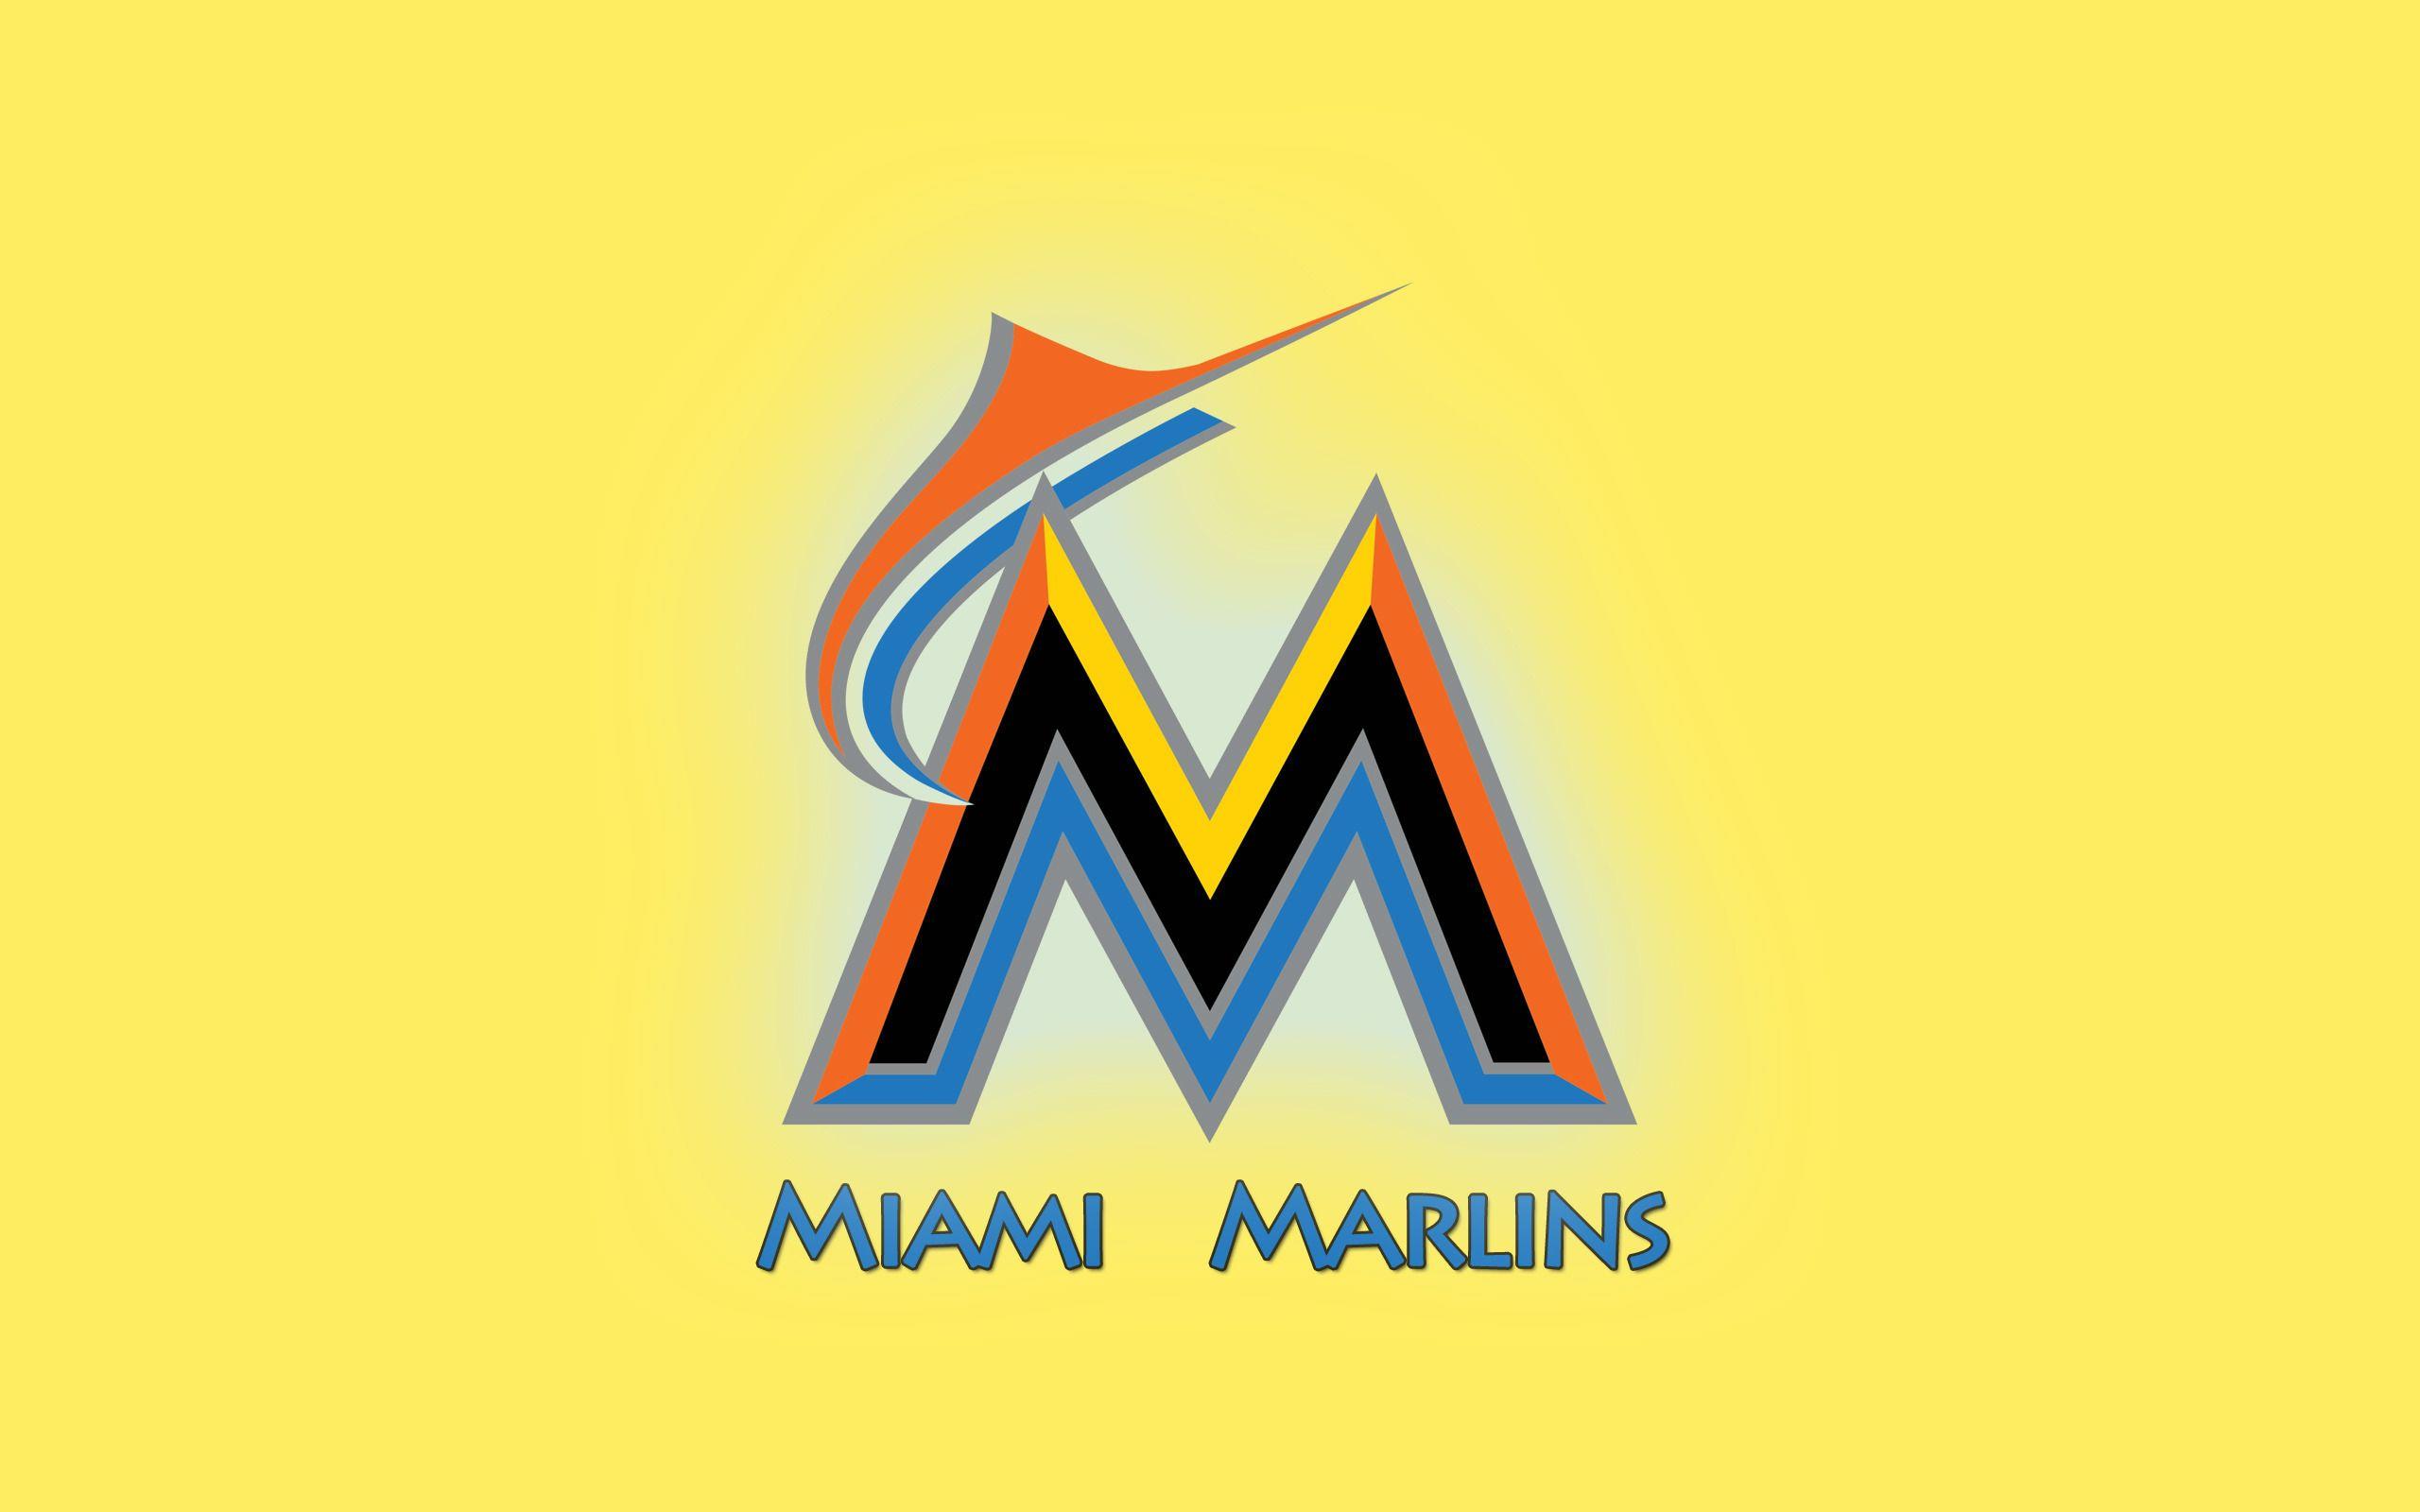 100+] Miami Marlins Wallpapers